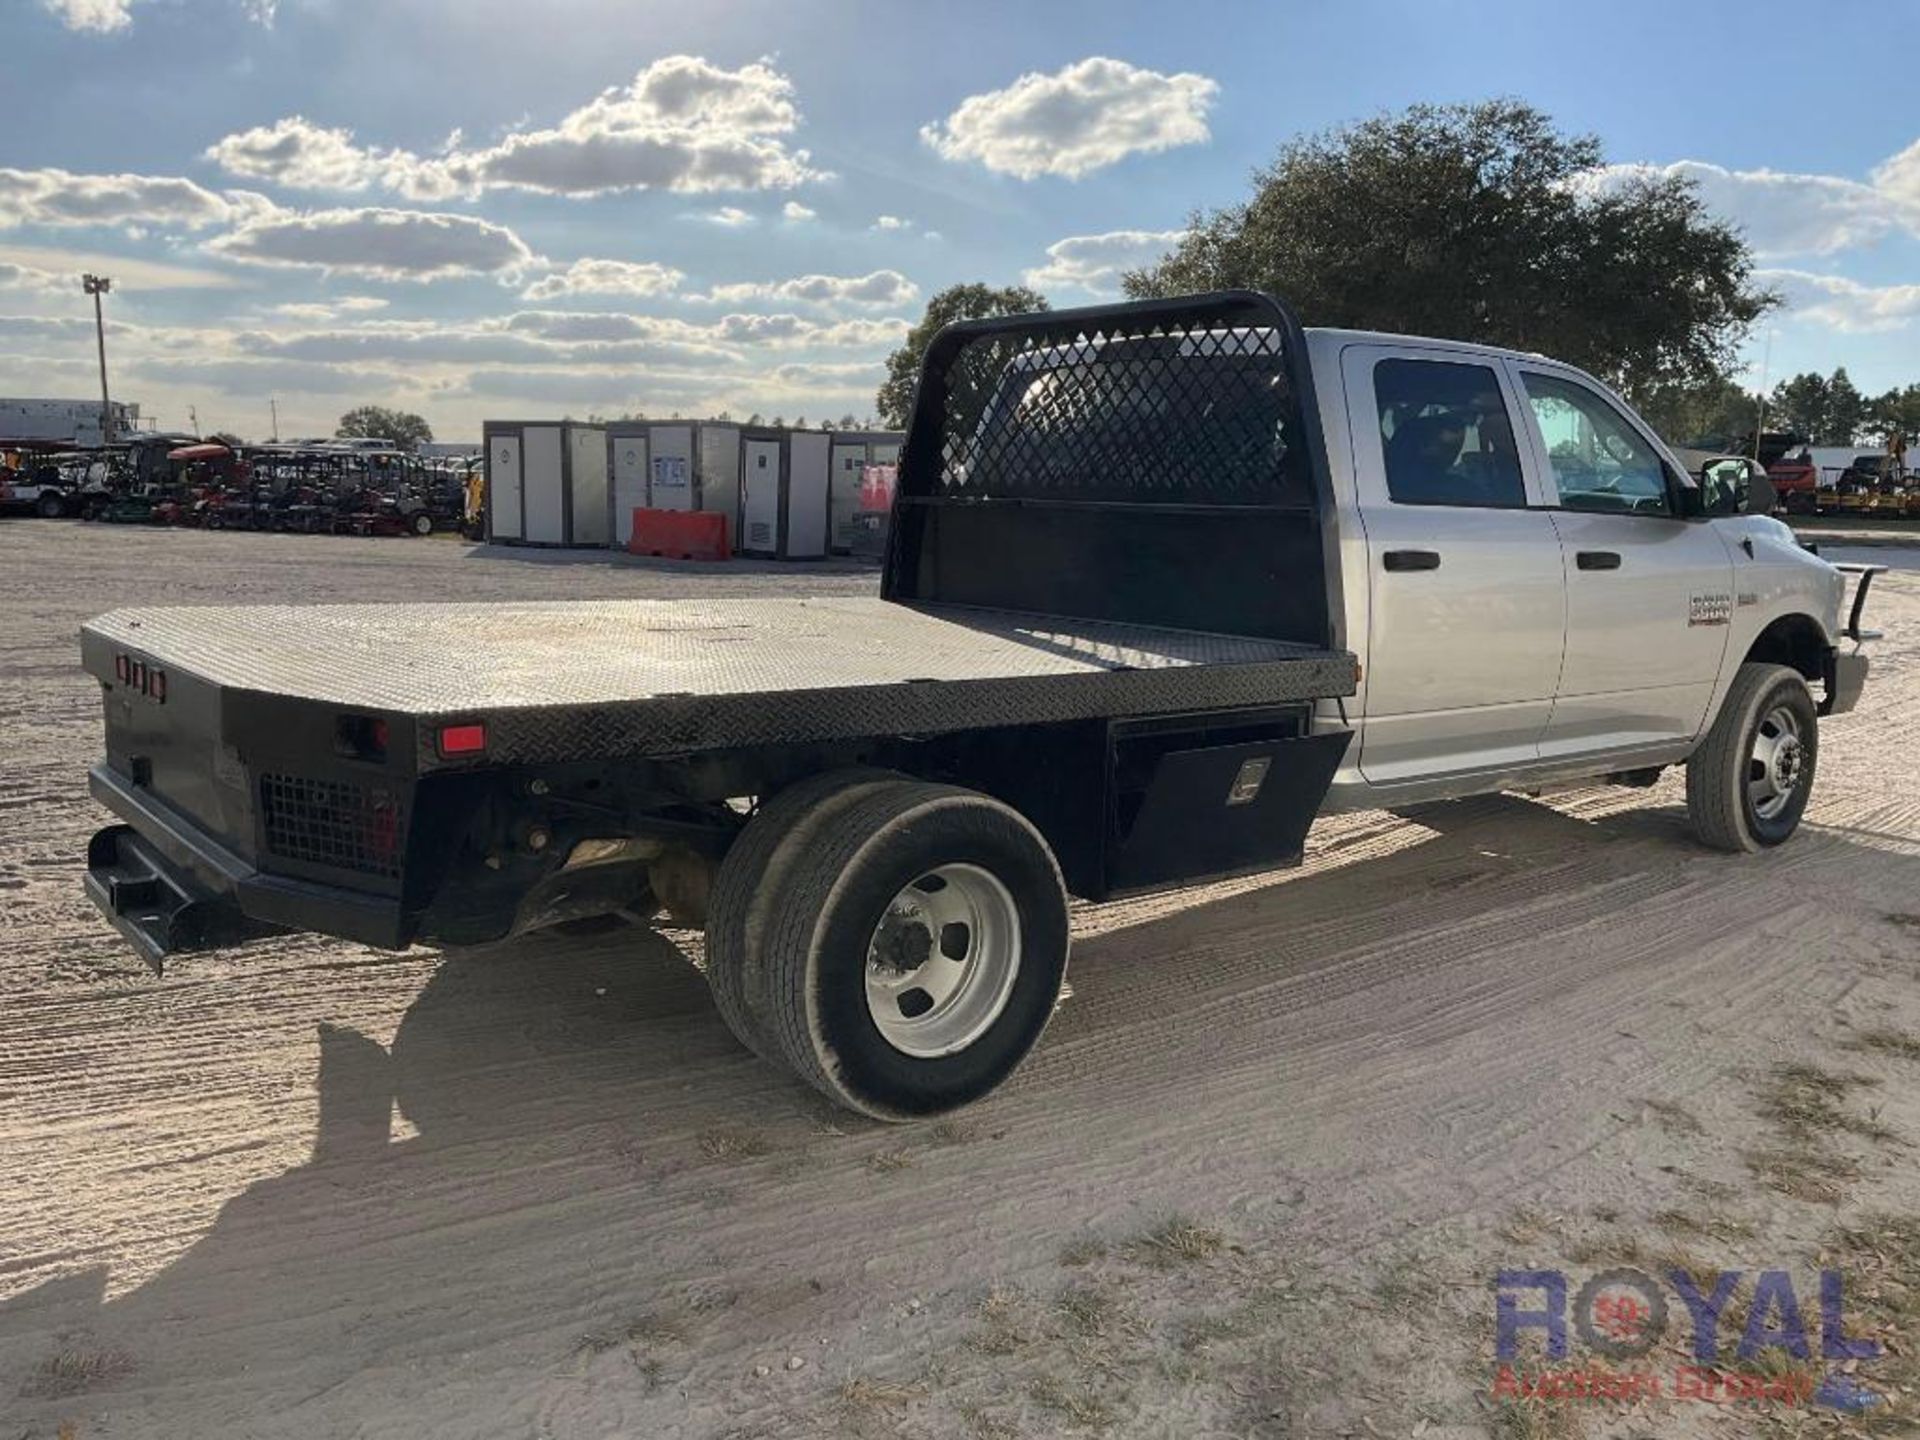 2018 Ram 3500 4x4 Gooseneck Hauler Flatbed Truck - Image 3 of 29